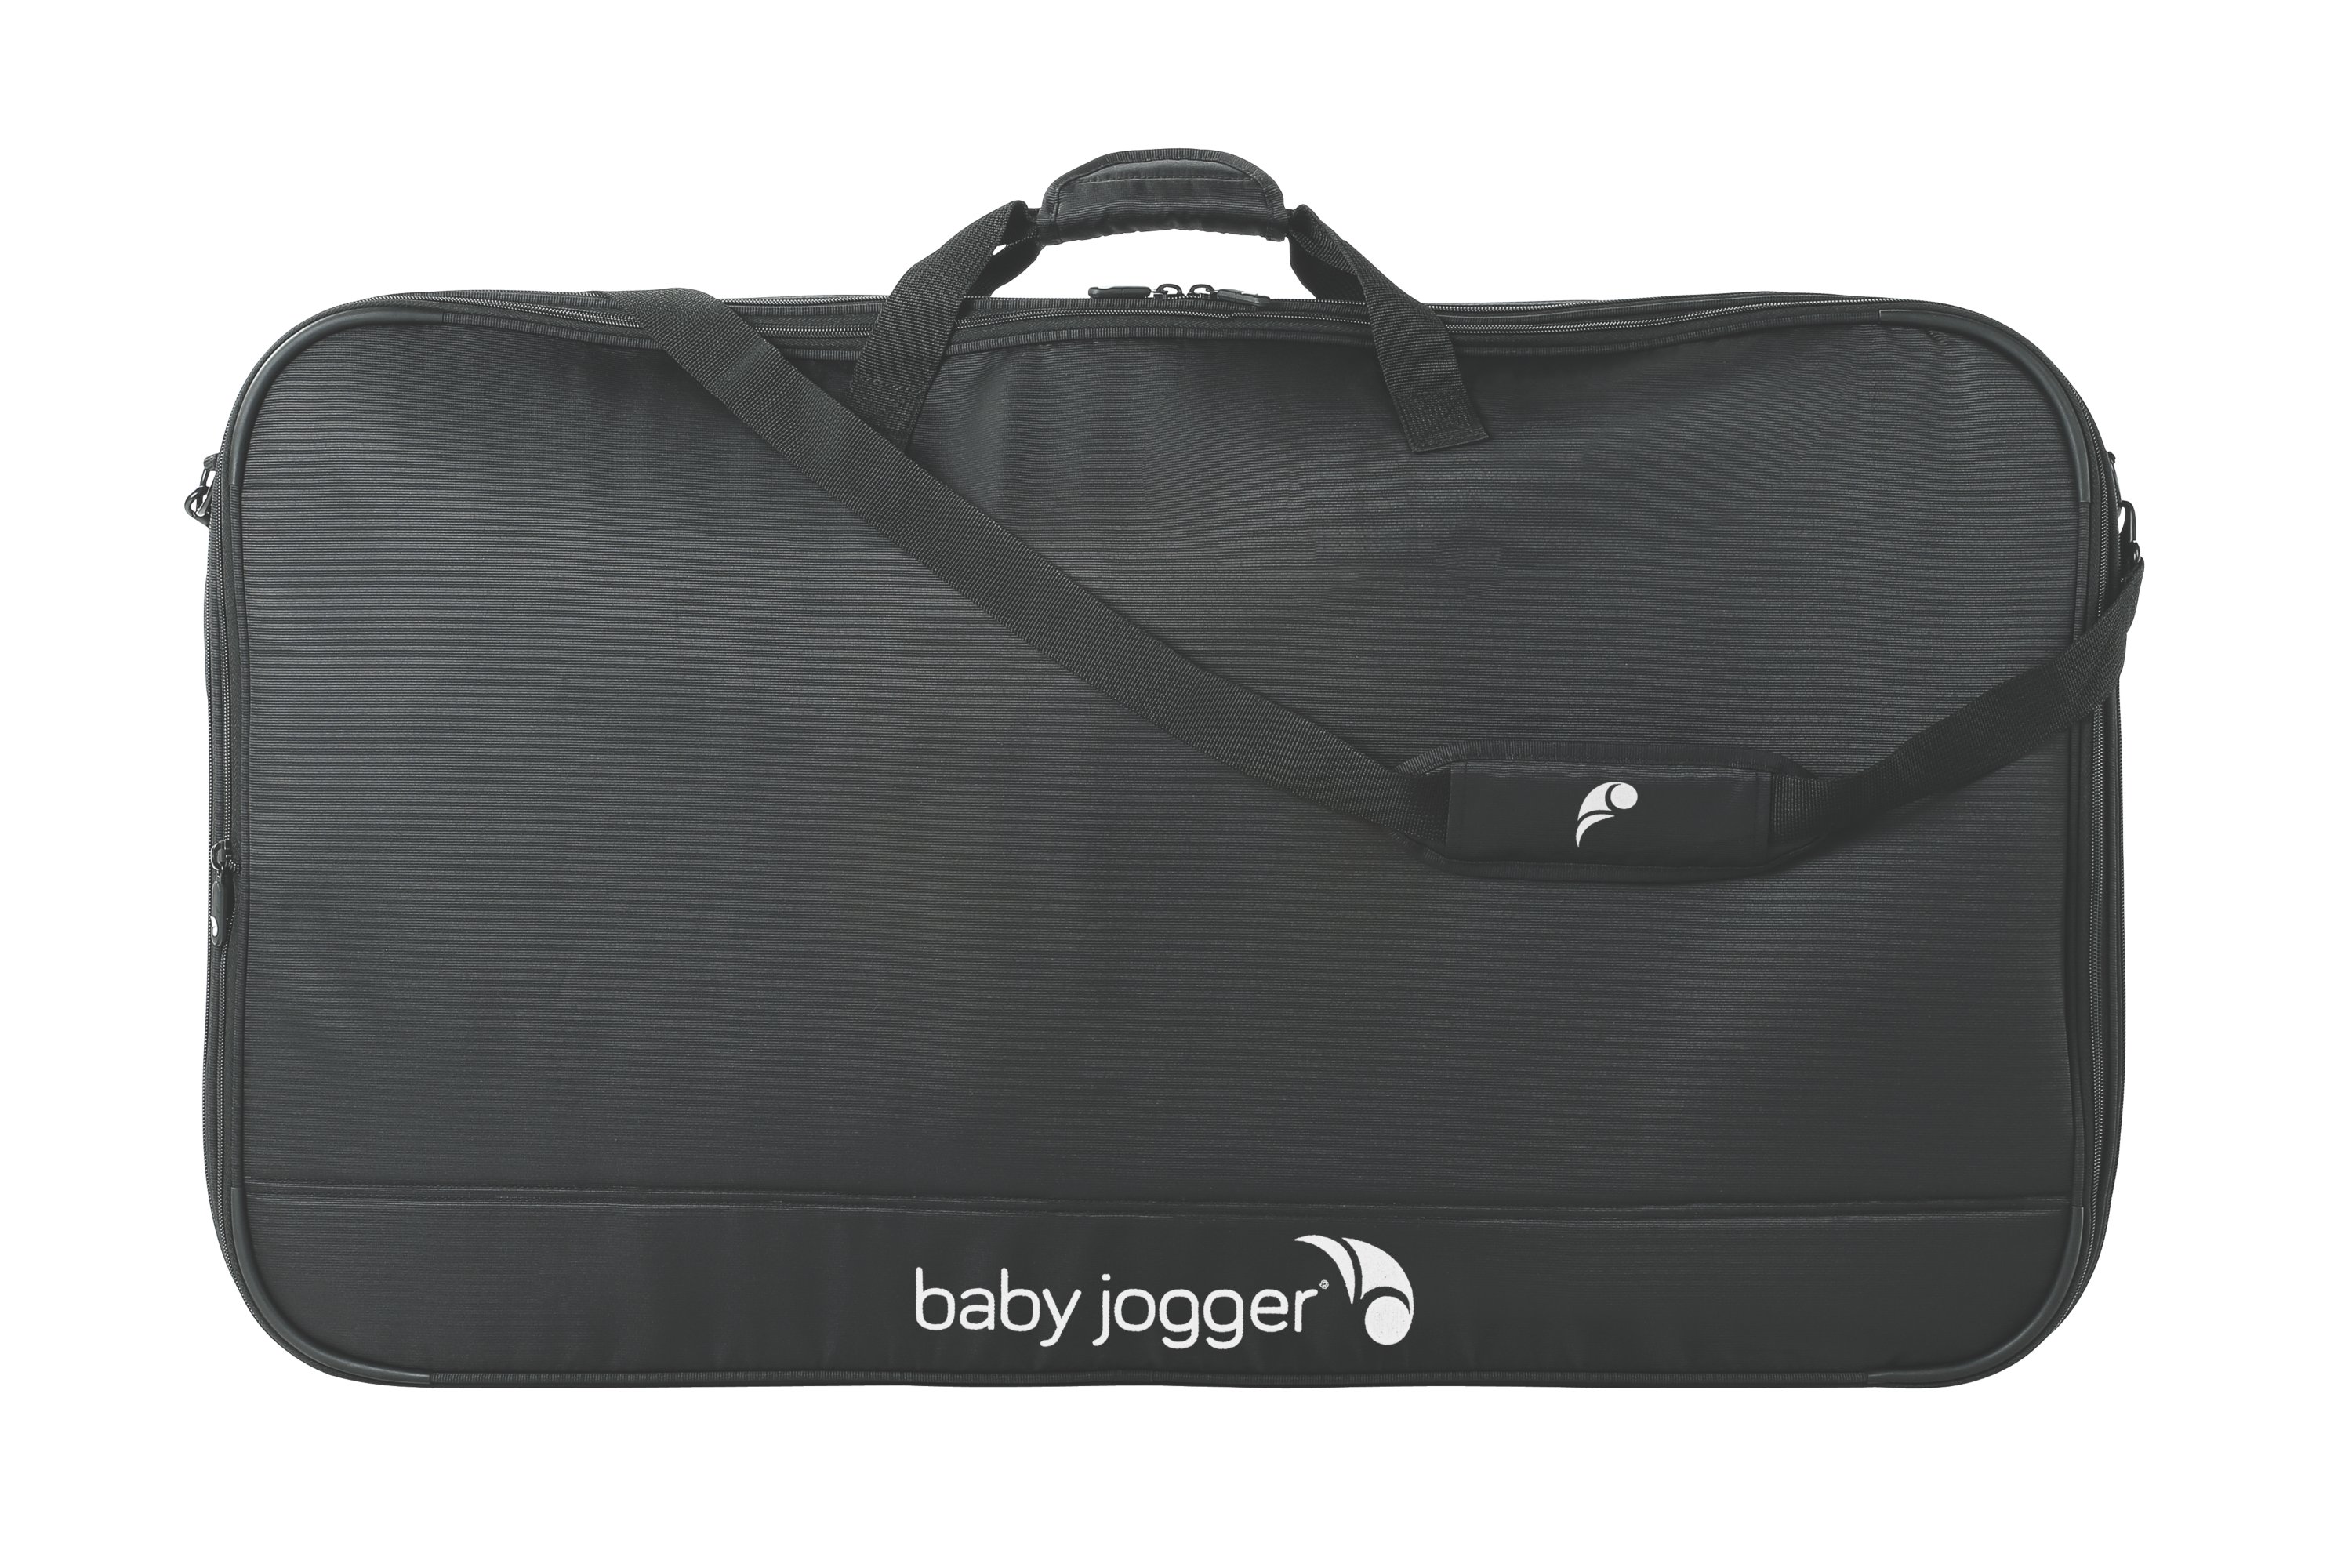 baby jogger double stroller bag